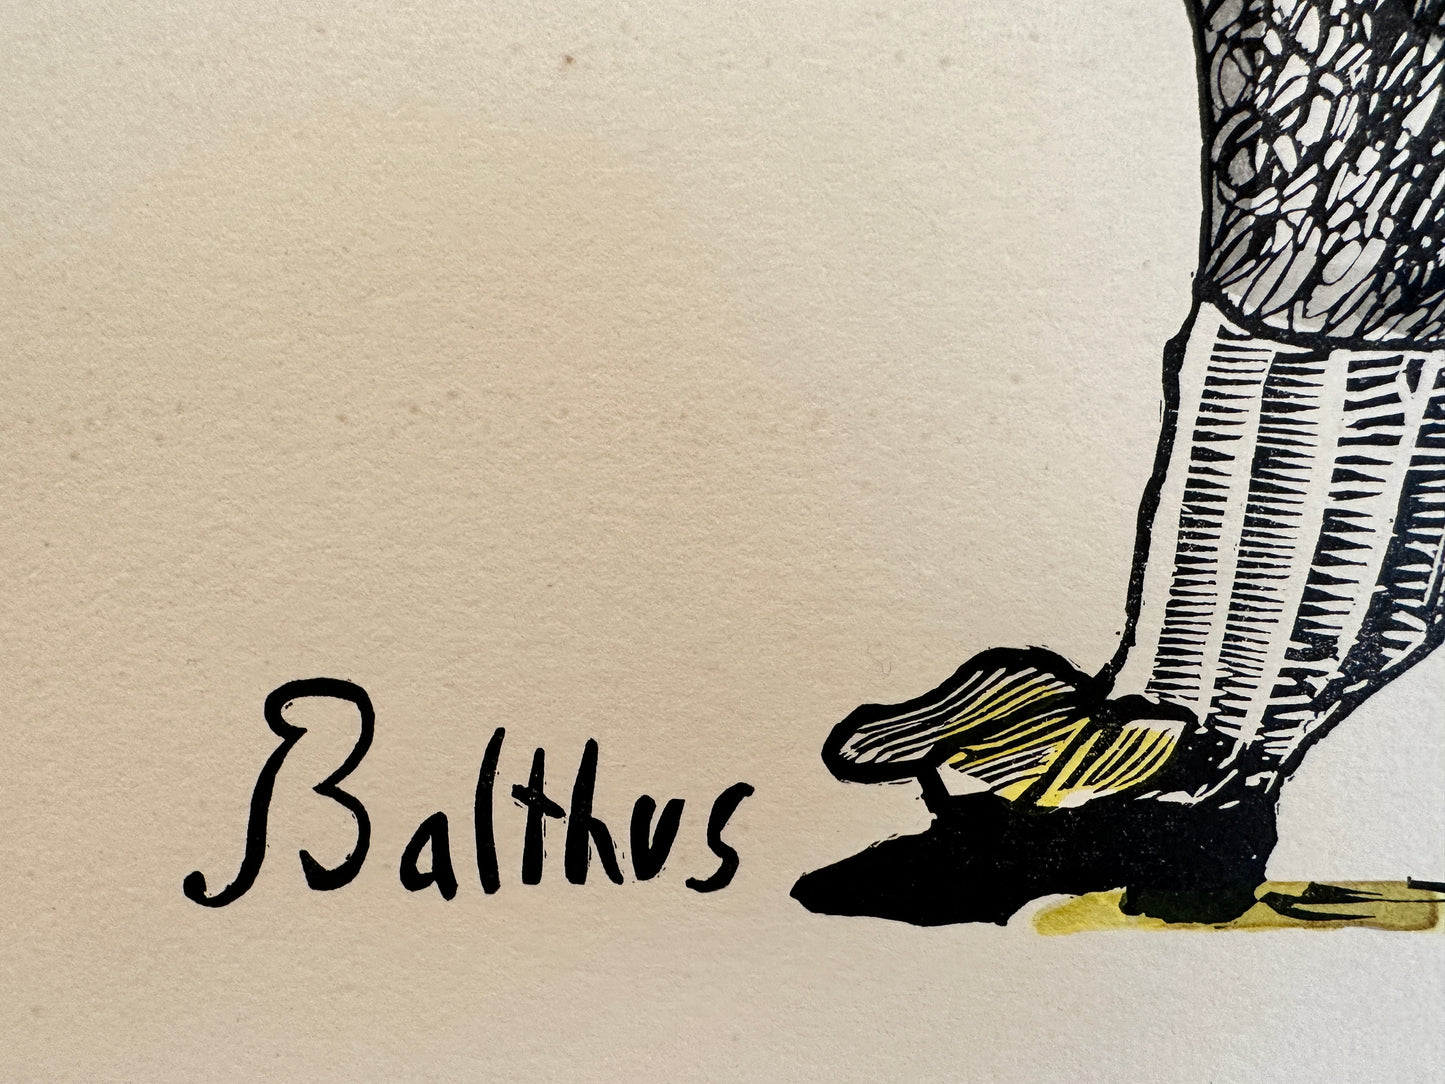 Balthus (Balthasar Klossowsky) Lithograph: "Man Eating a Cigarette", 1960